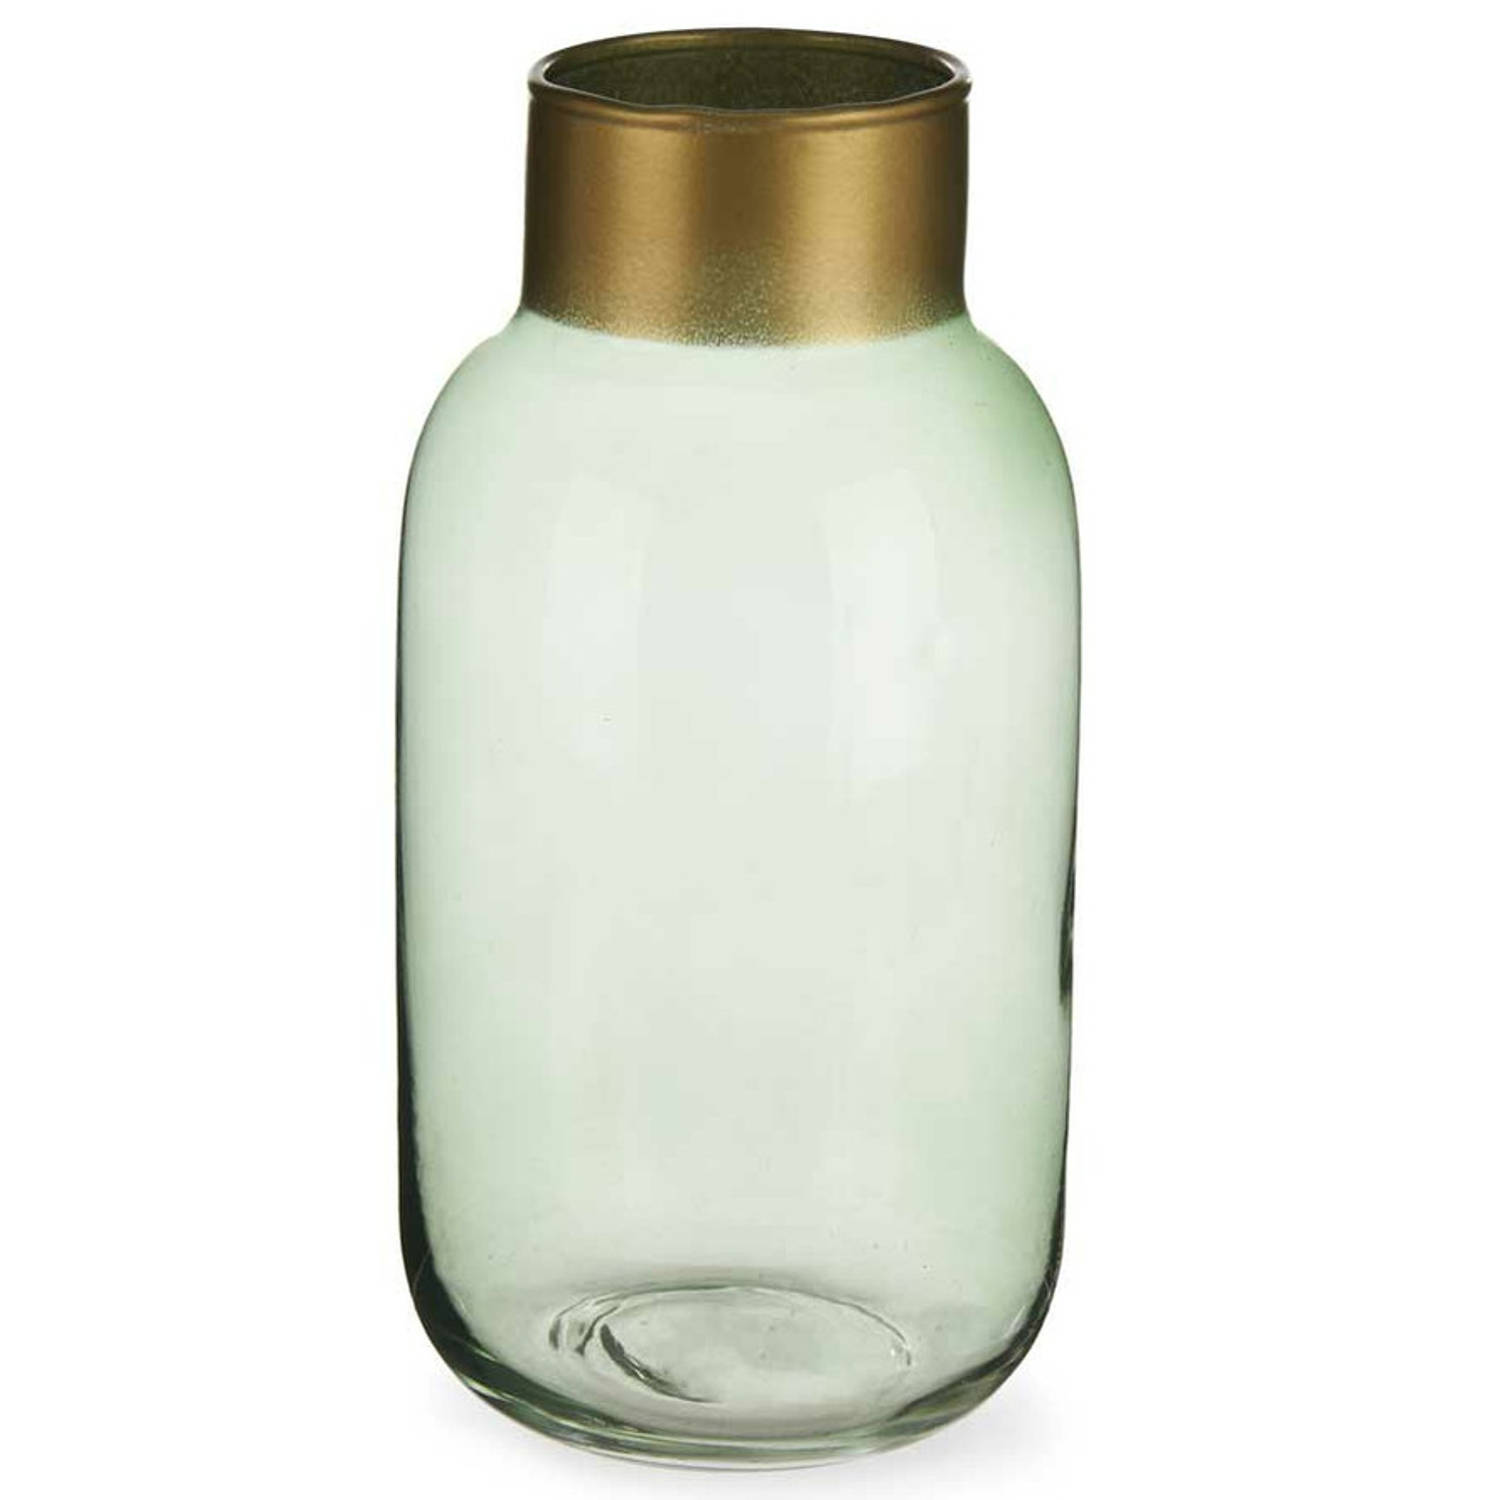 Giftdecor - Bloemenvaas - Glas - groen transparant/goud - 12 x 24 cm